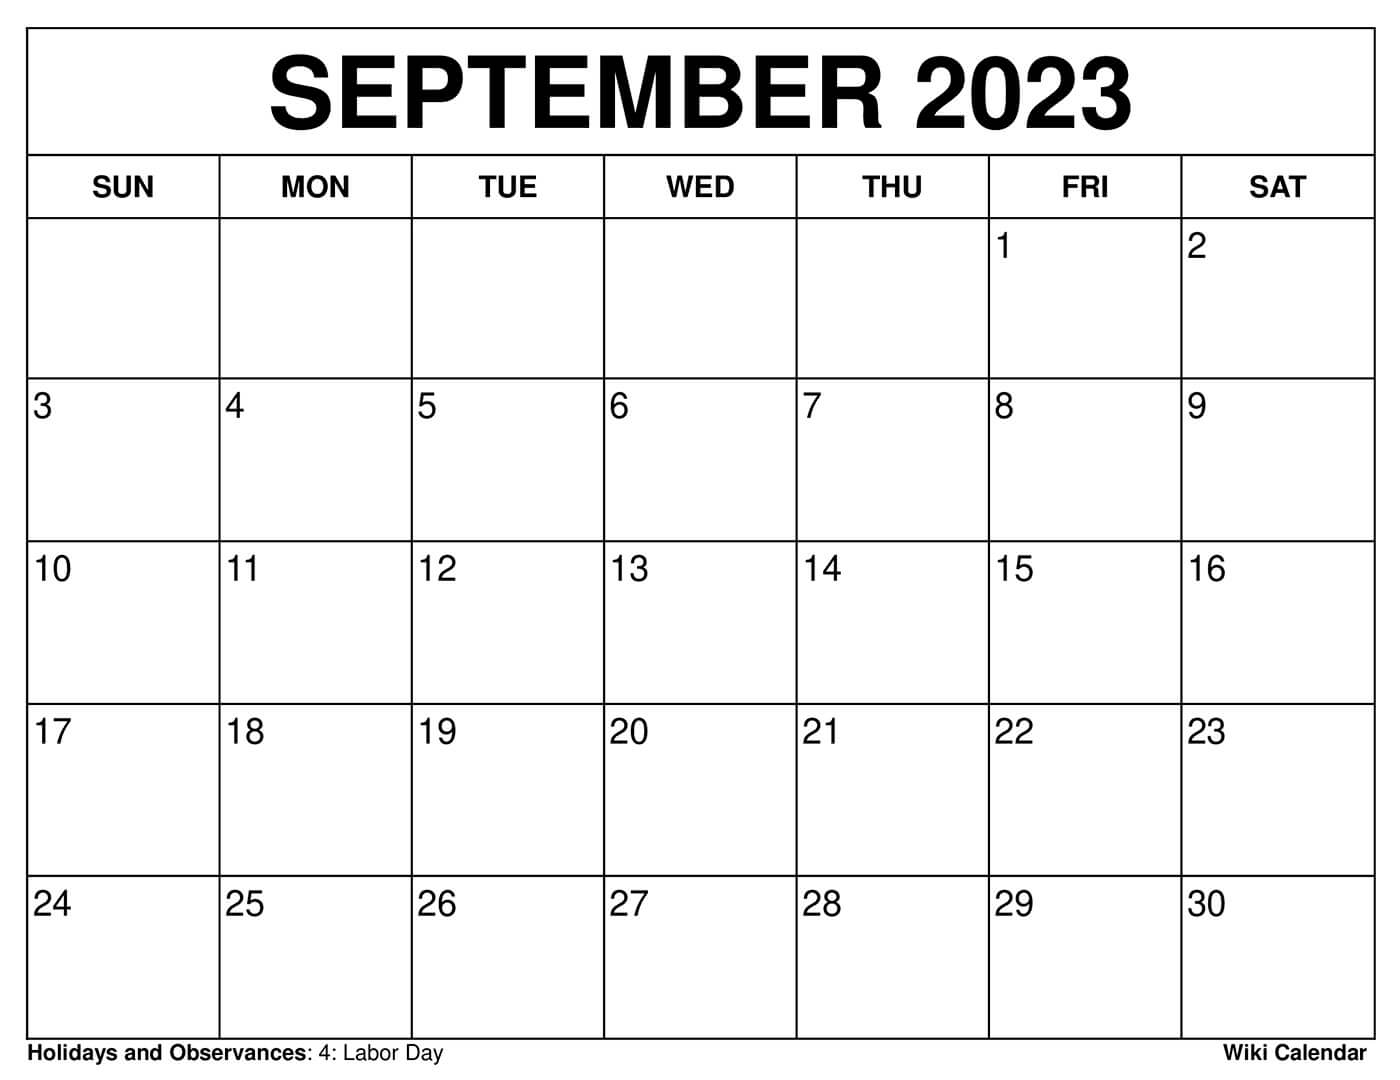 September 2022 Holiday Calendar Free Printable September 2022 Calendars - Wiki Calendar